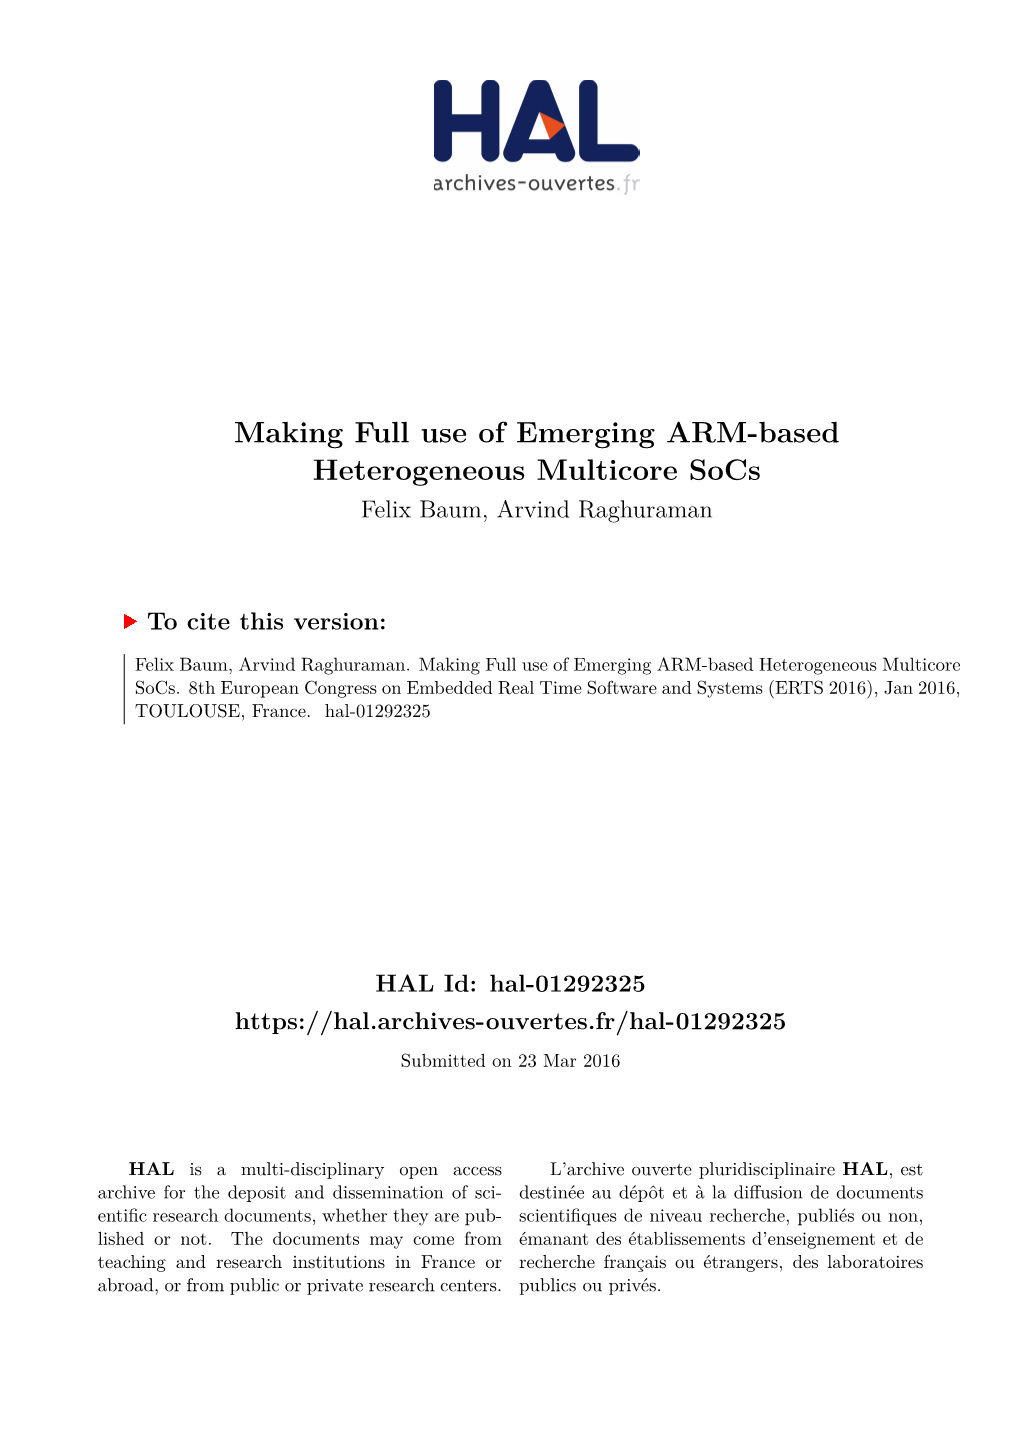 Making Full Use of Emerging ARM-Based Heterogeneous Multicore Socs Felix Baum, Arvind Raghuraman